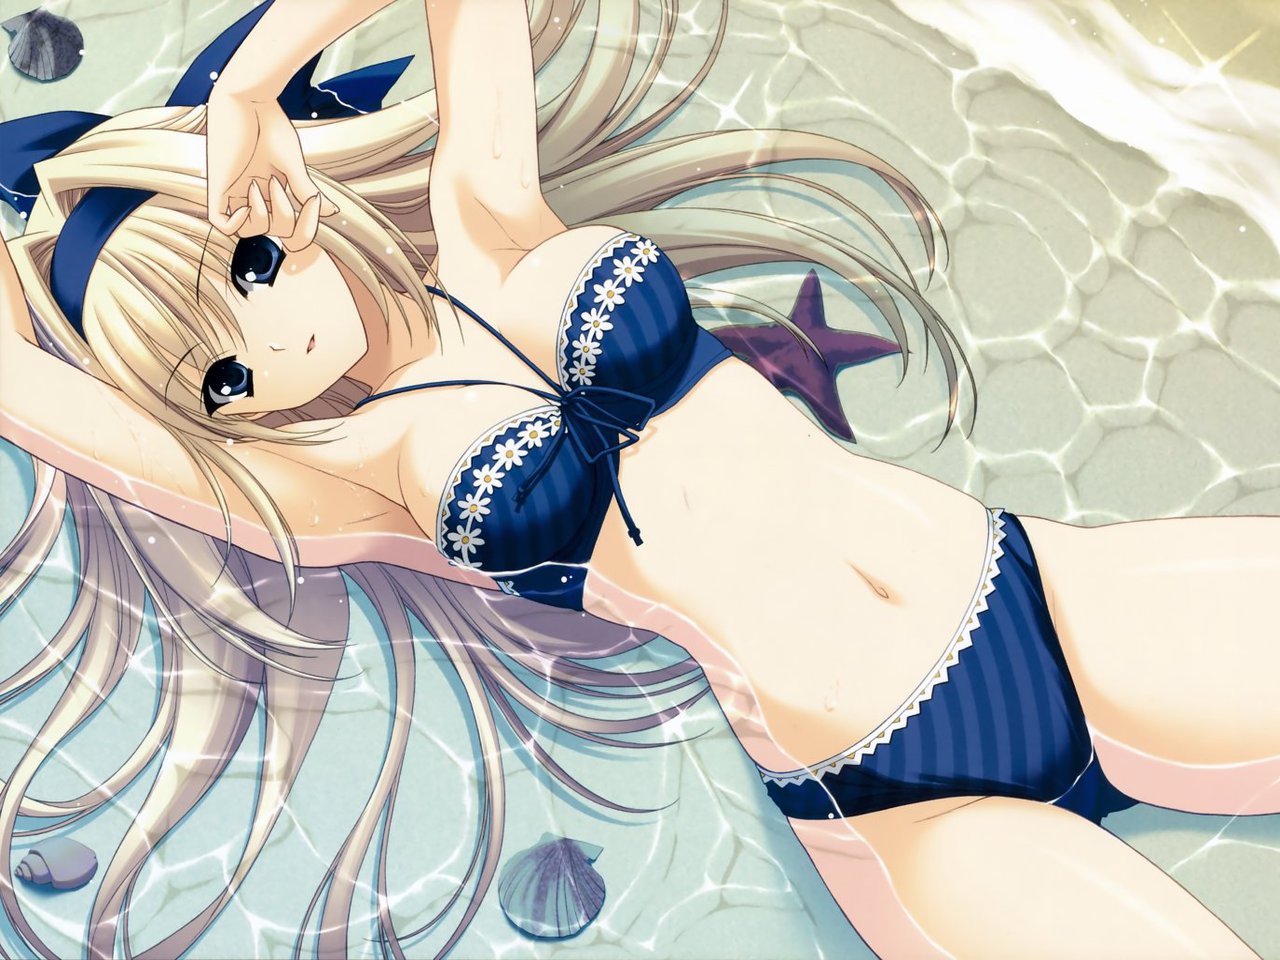 anime+girl+blue+bikini+swim+suit+beach+wallpaper.jpg.